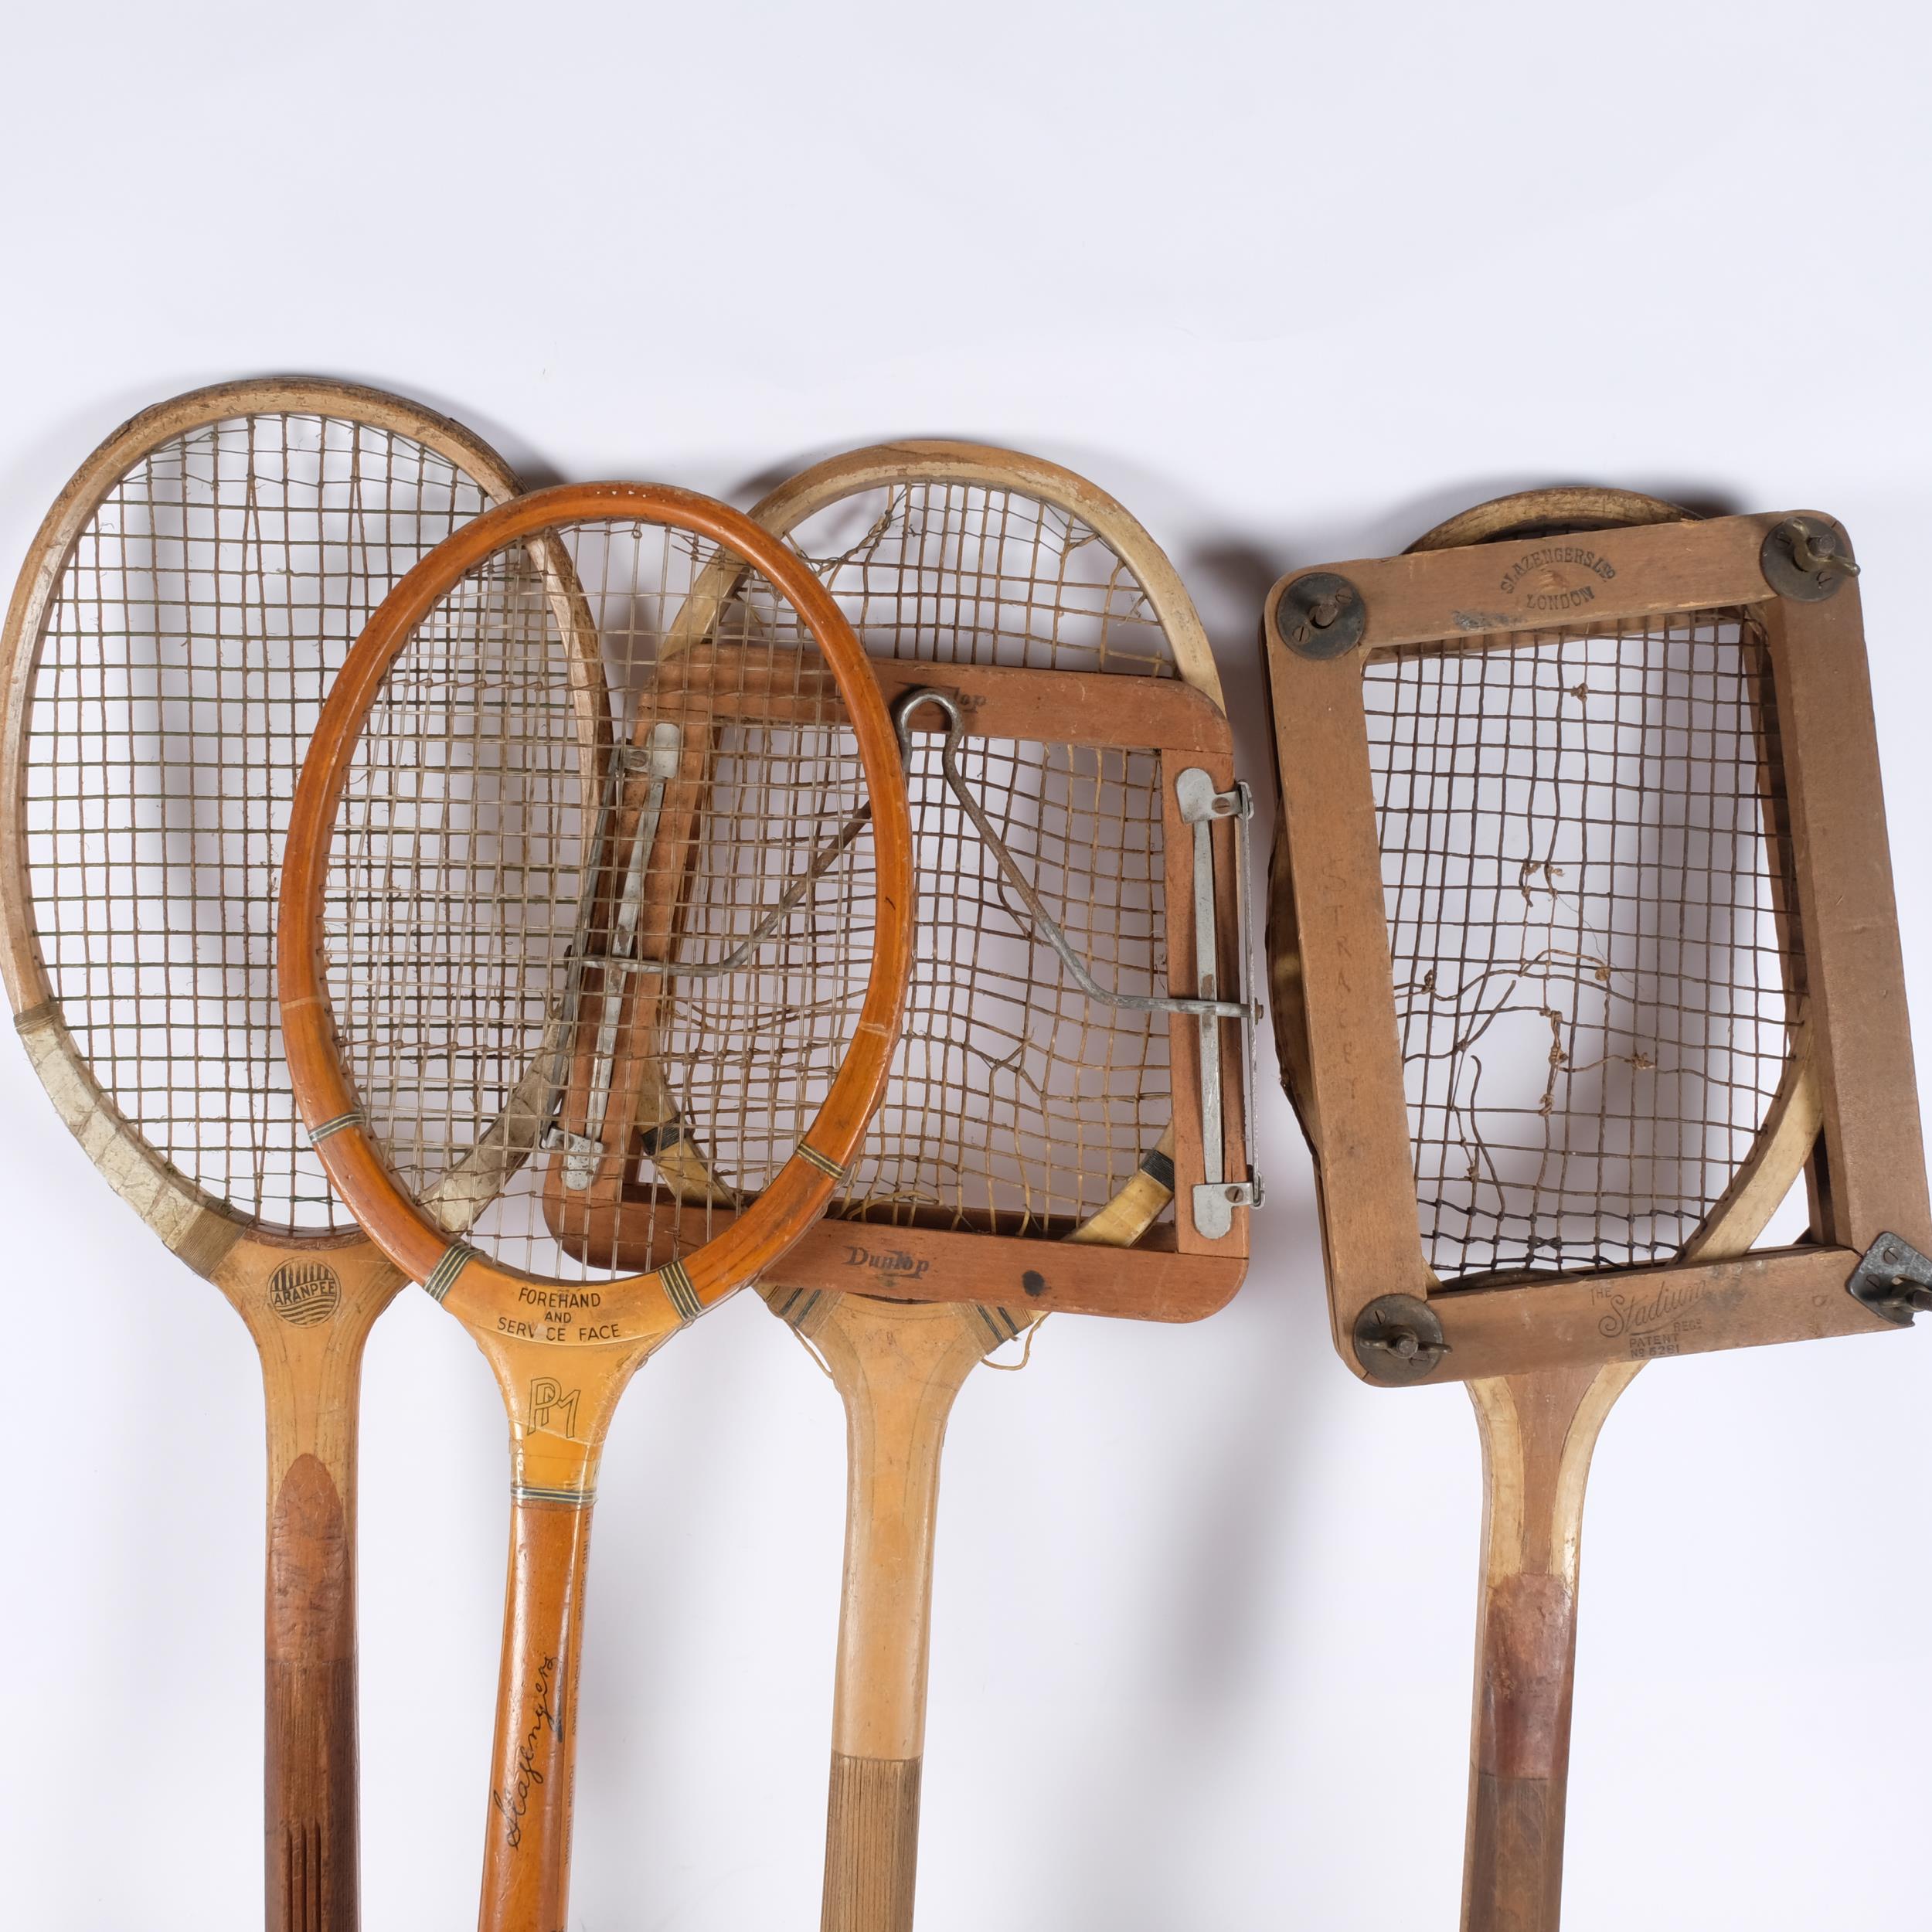 Various Vintage wooden tennis rackets and presses, including Dunlop, Slazenger etc. (12). - Image 2 of 2